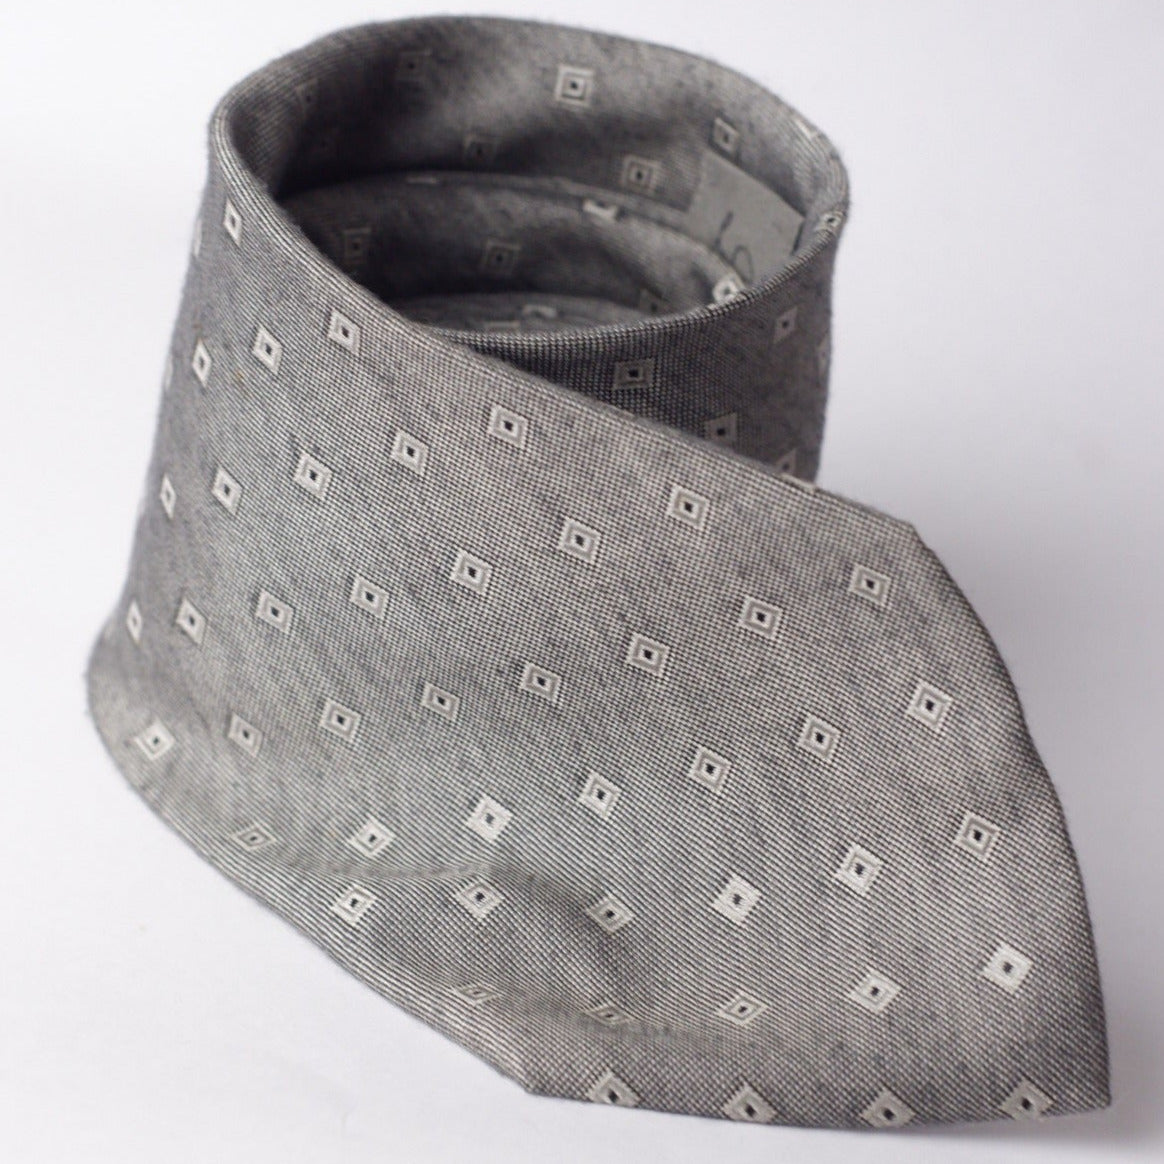 Les Copairs Light Grey with Squares Necktie